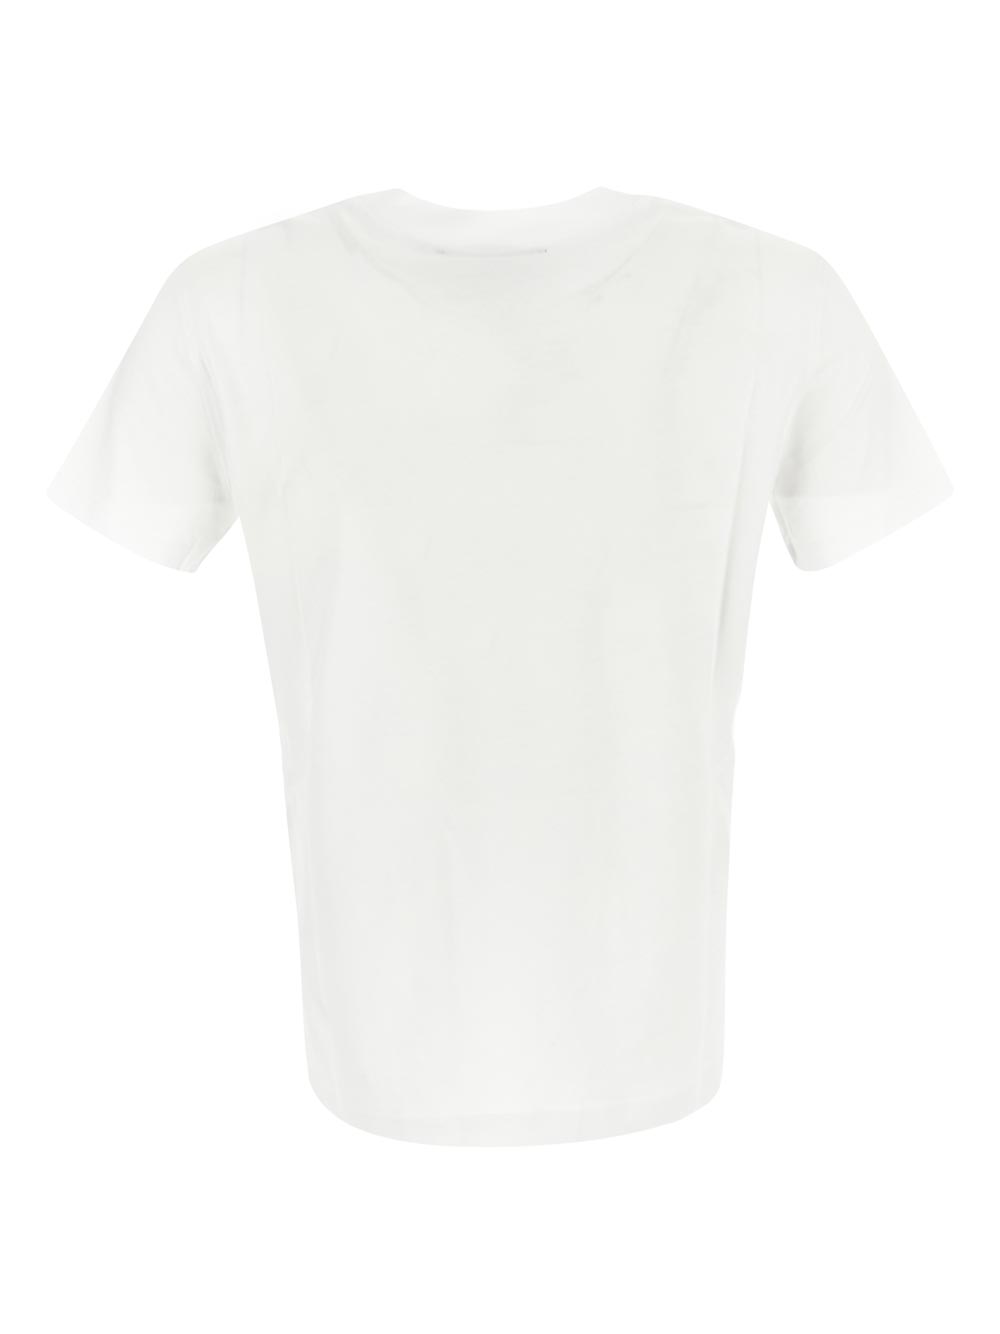 VERSACE JEANS COUTURE VERSACE JEANS COUTURE T-shirt white 76HAHT04CJ00TG03